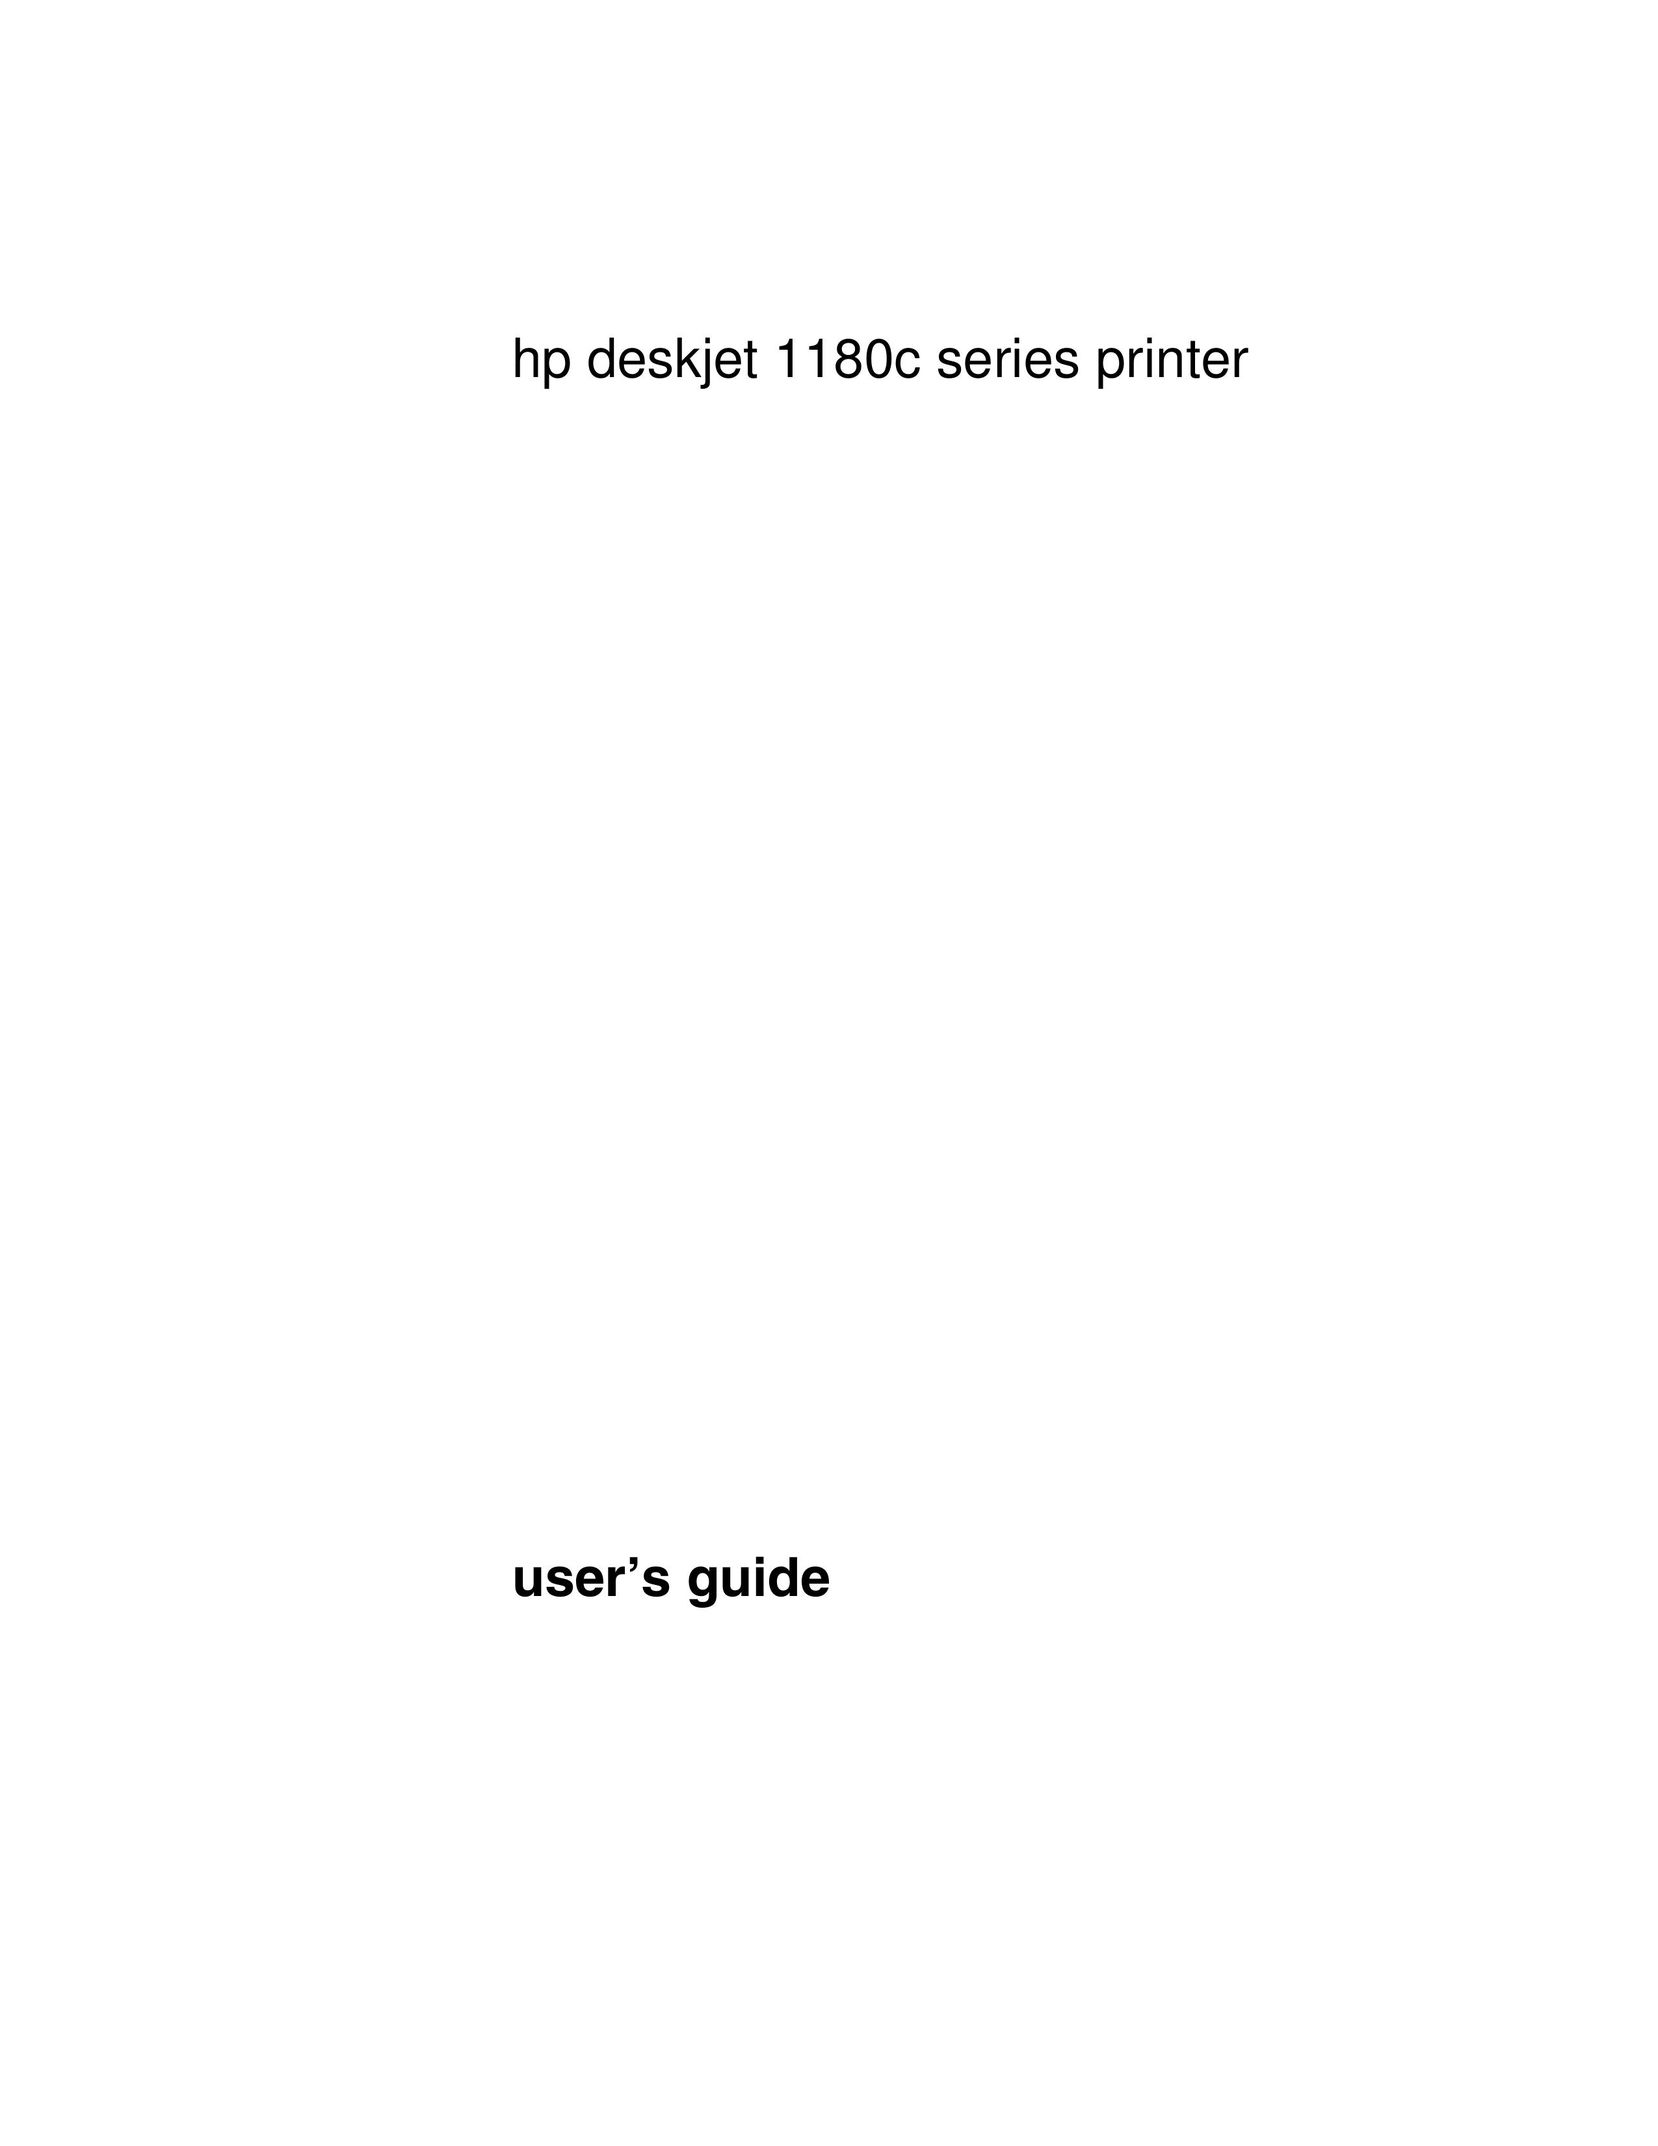 HP (Hewlett-Packard) 1180C Printer User Manual